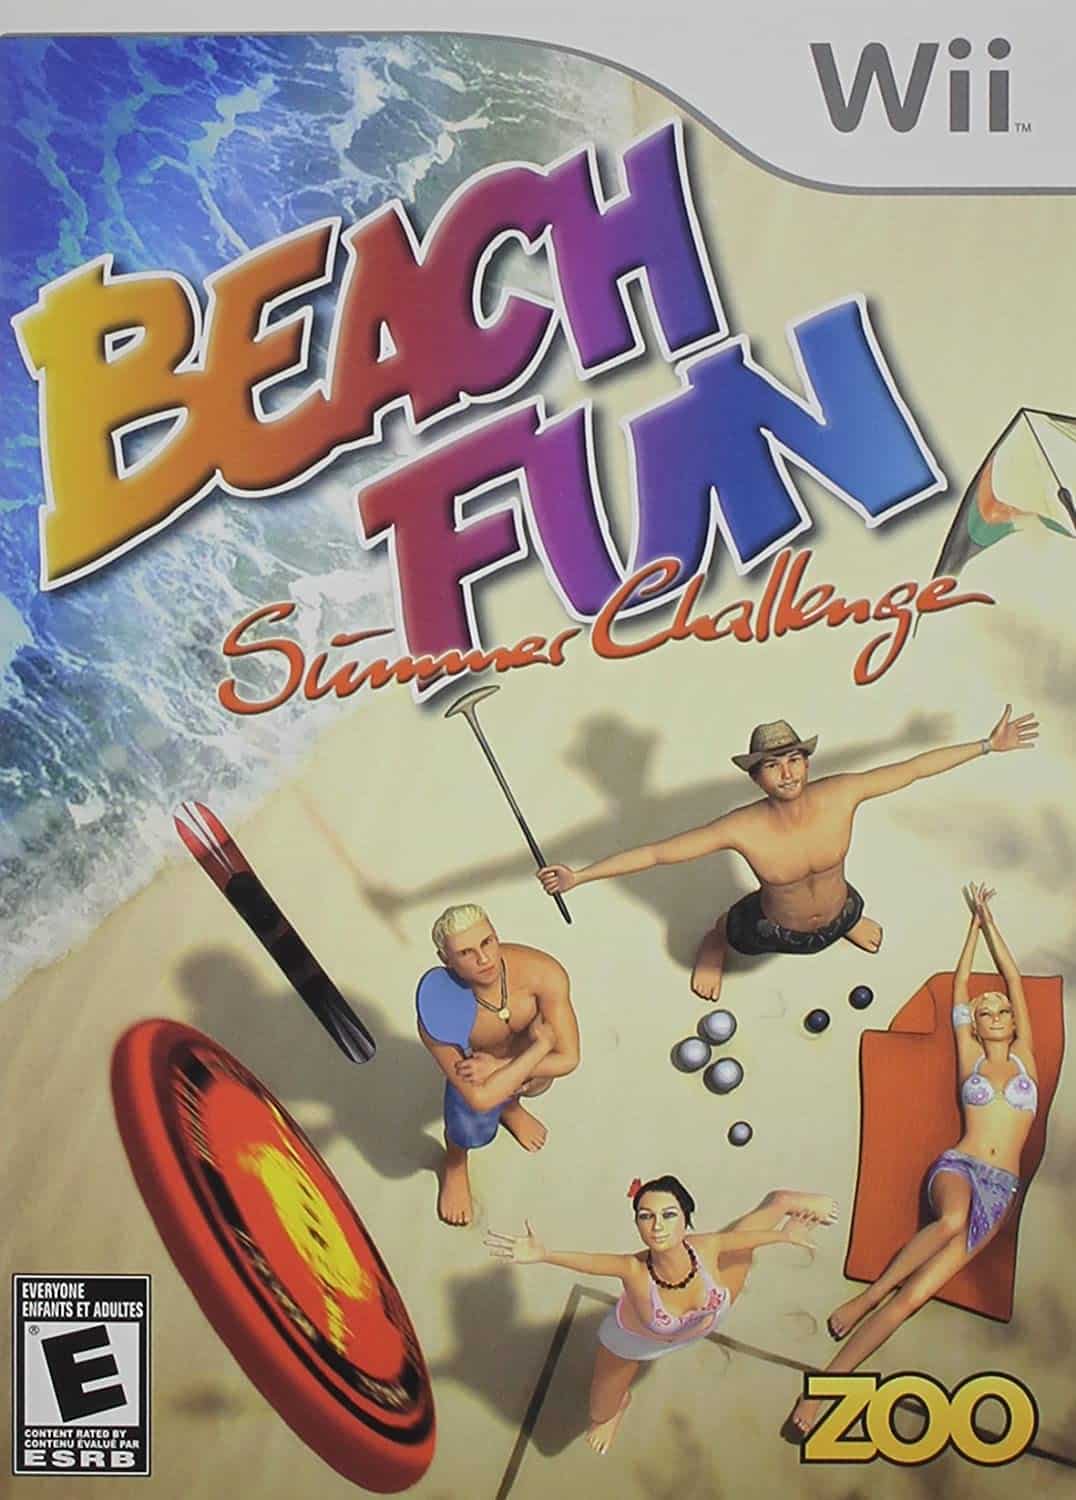 Beach Fun Summer Challenge player count stats